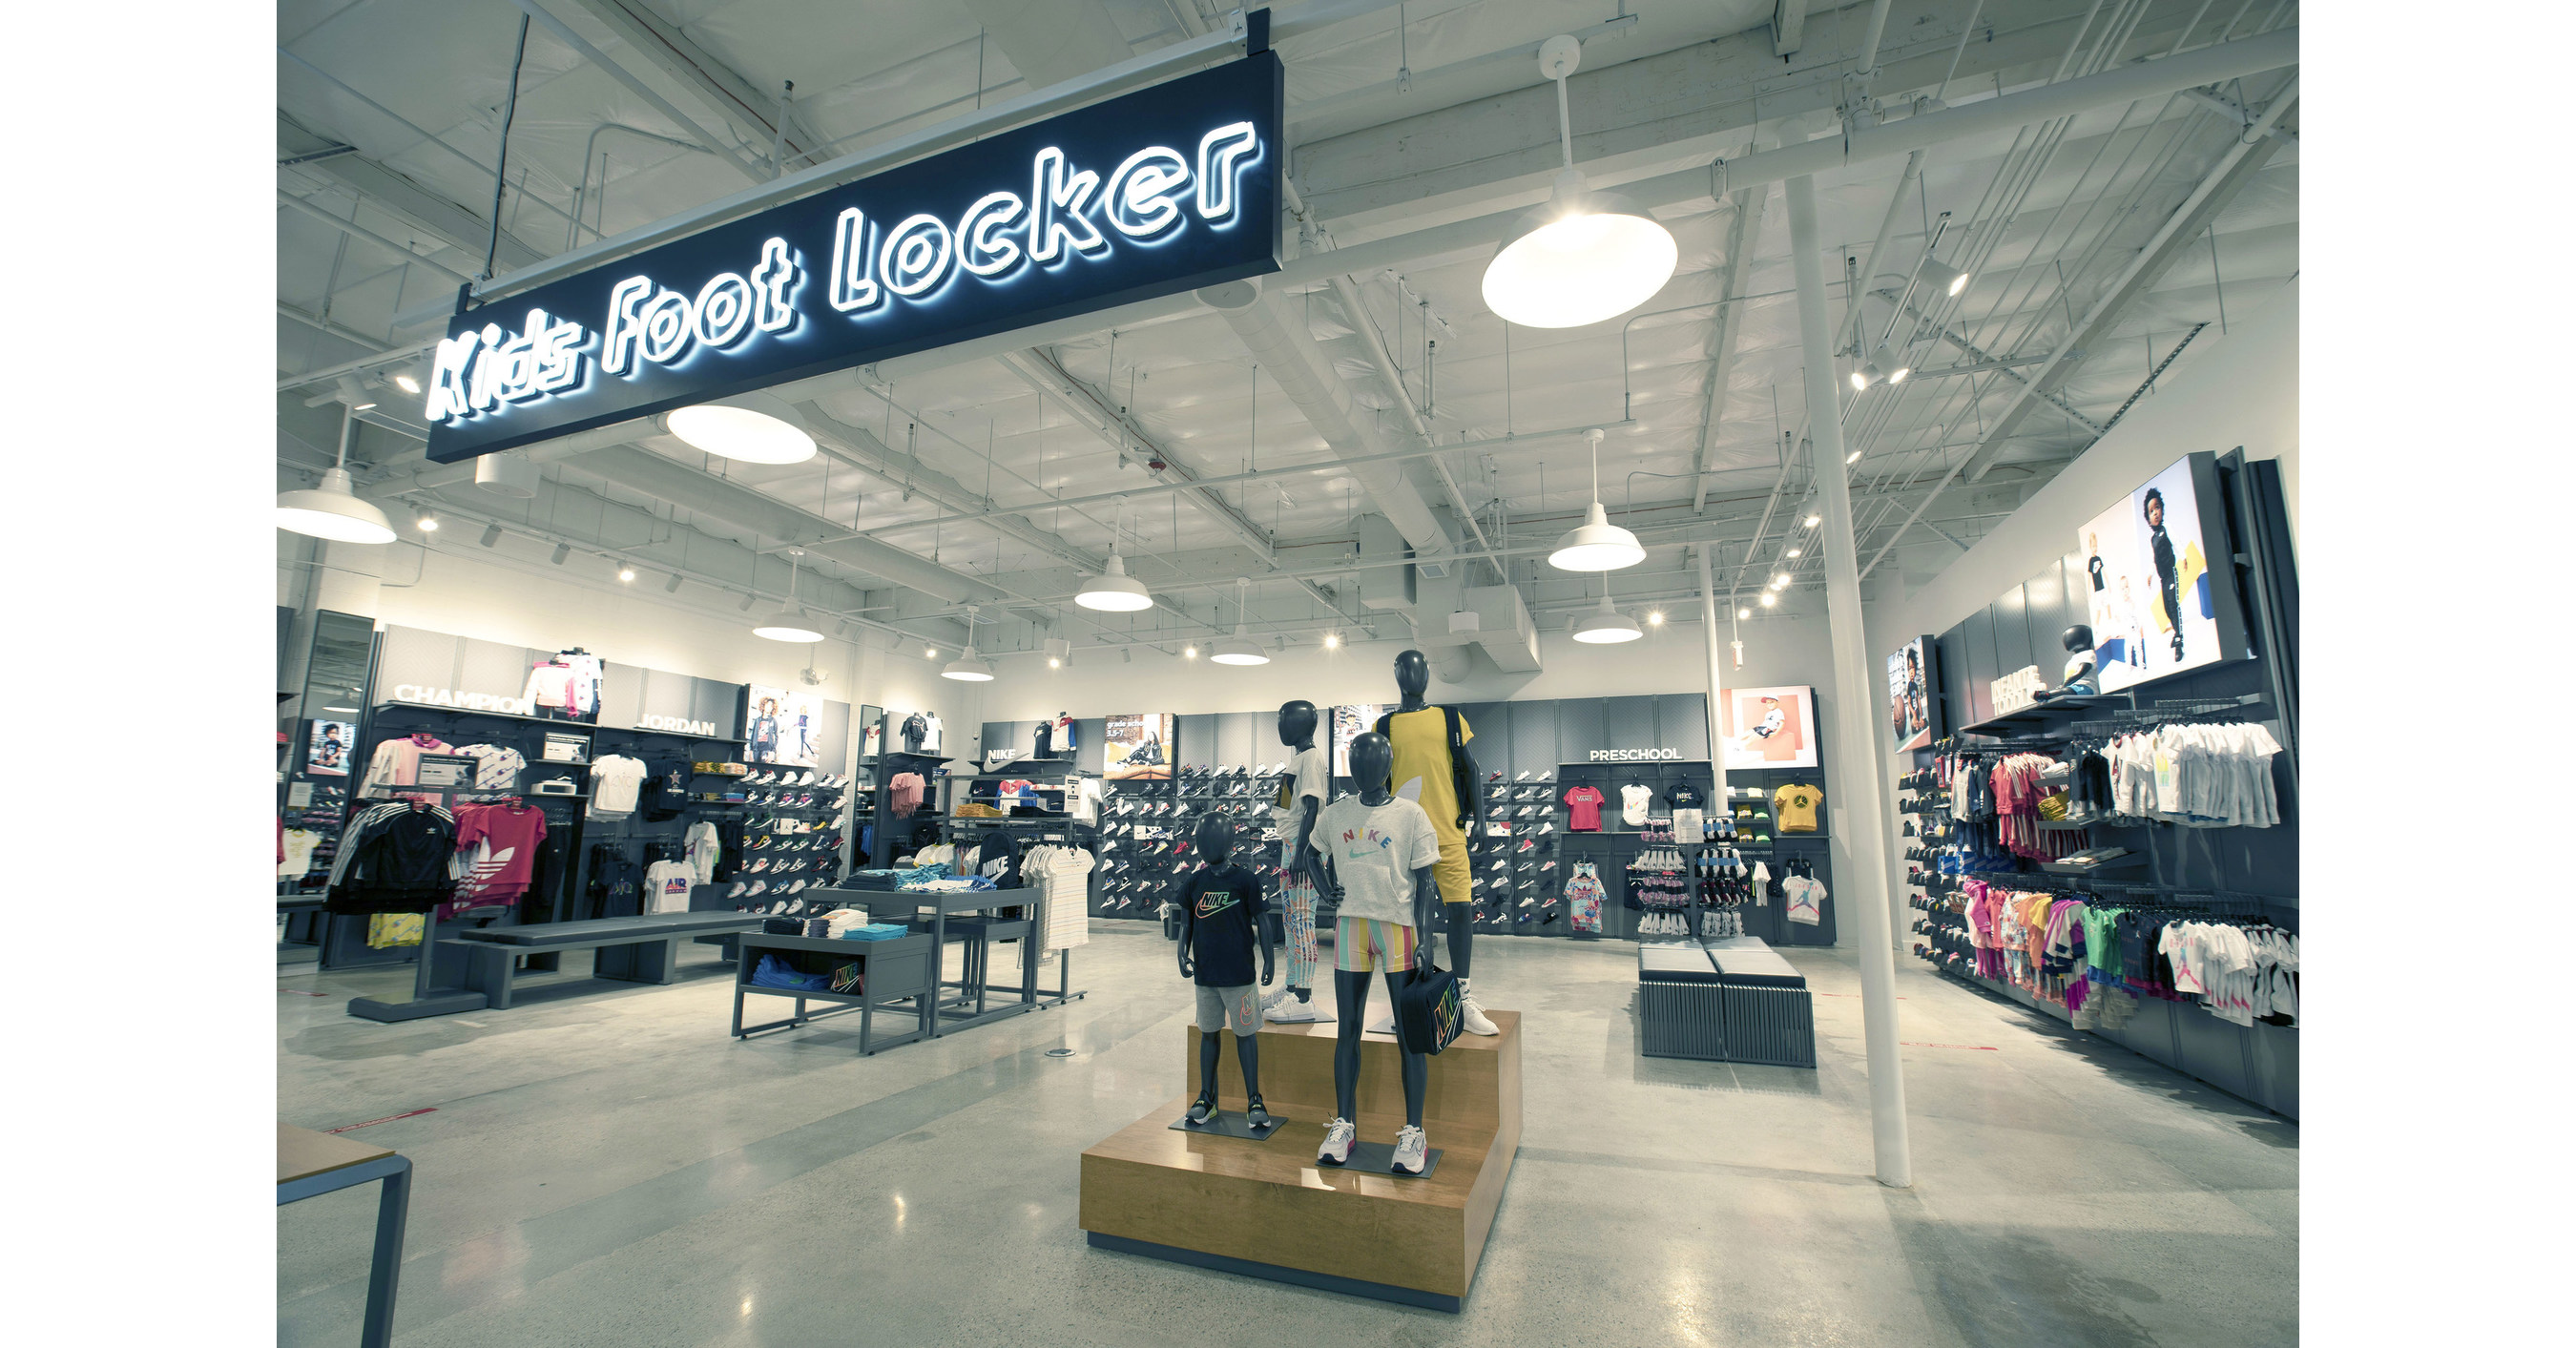 Compton Foot Locker opens as community hub for sneaker culture